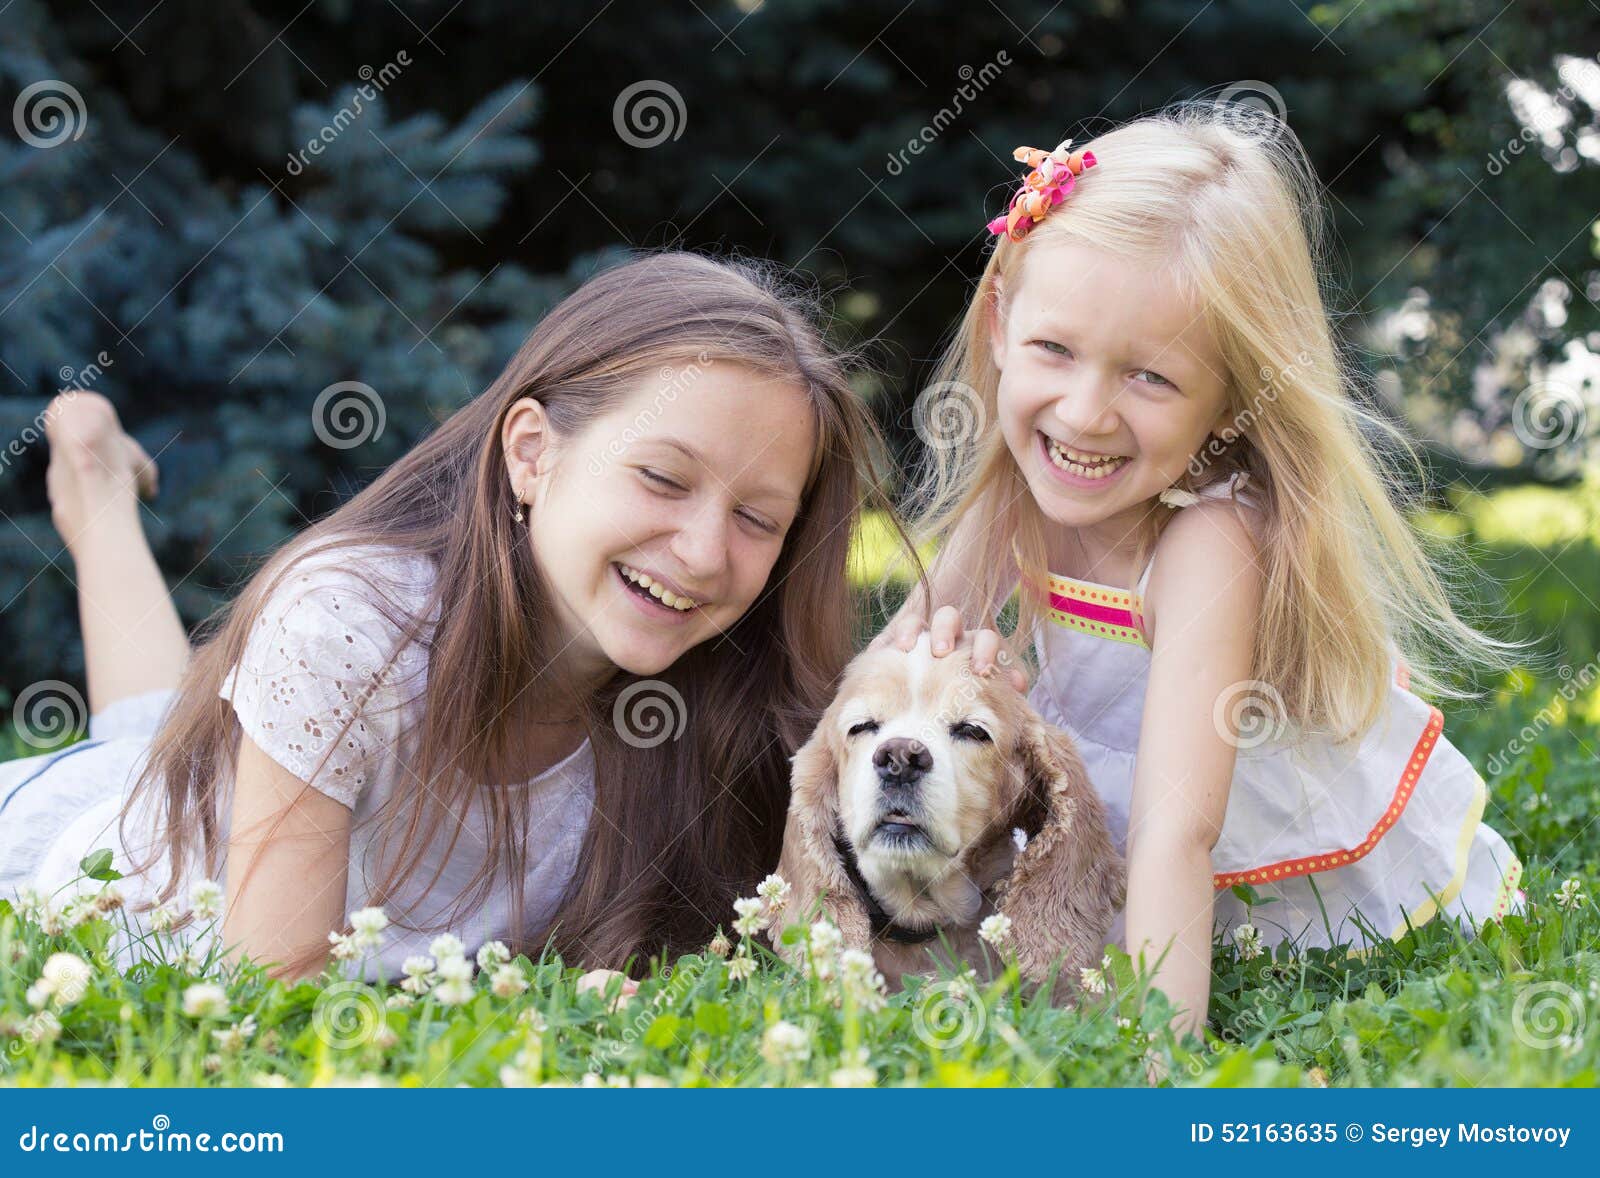 Girl two dog. Две девочки и собака. 2 Собаки и девушка. Собаки девочки сестры. Две девочки с собакой картинка.